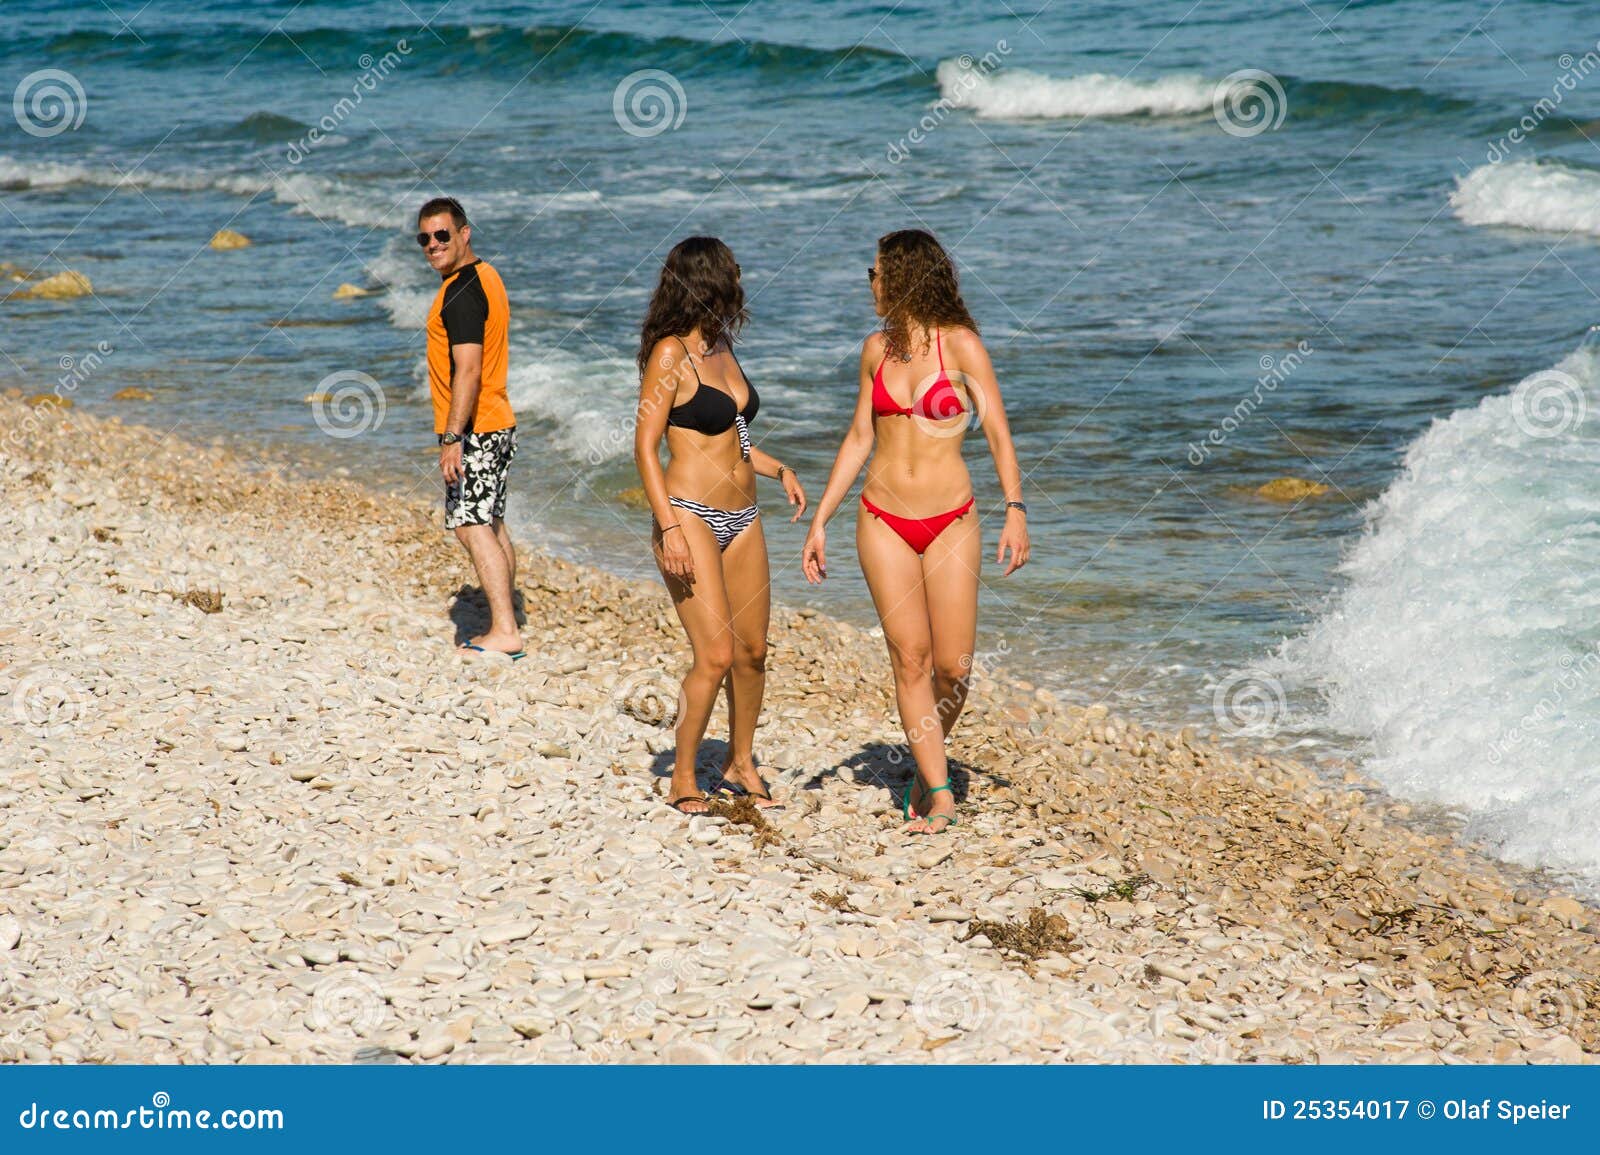 nude beach mature voyeur 3some